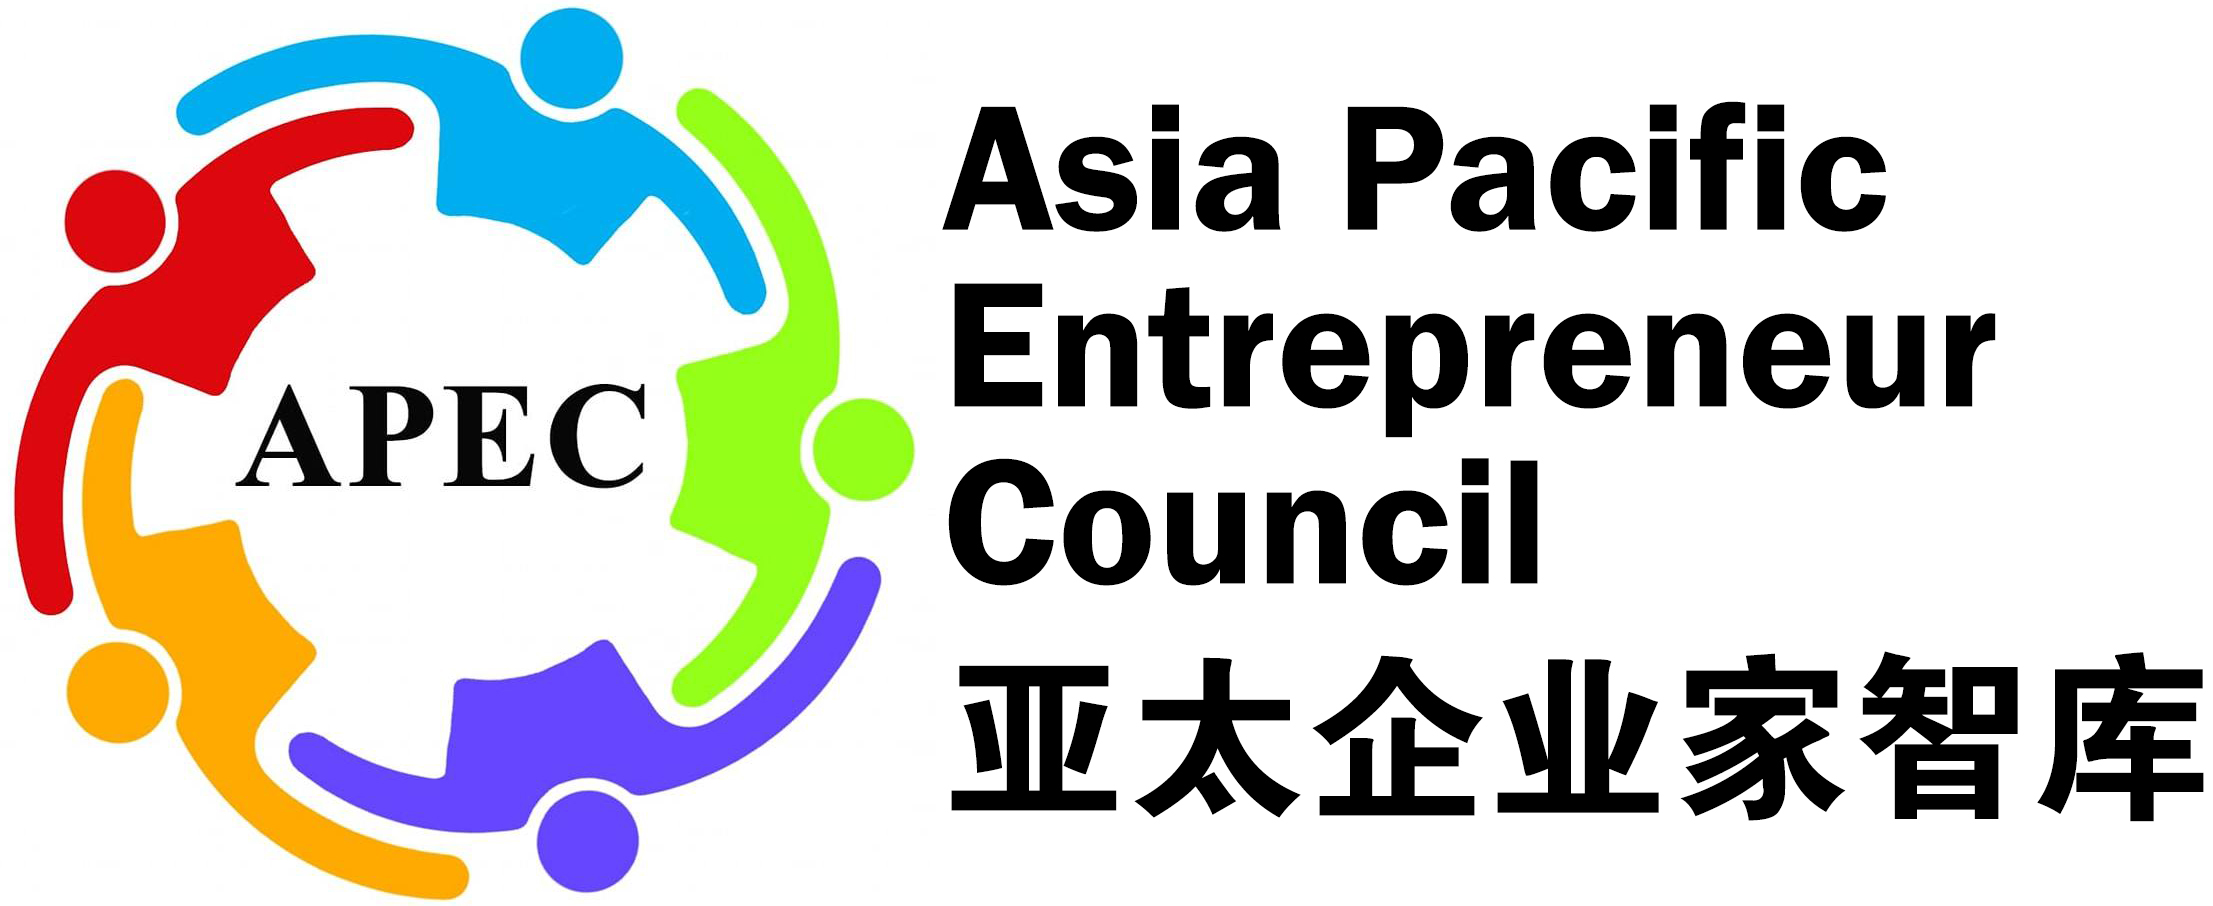 Asia Pacific Entrepreneur Council, APEC 亚太企业家智库